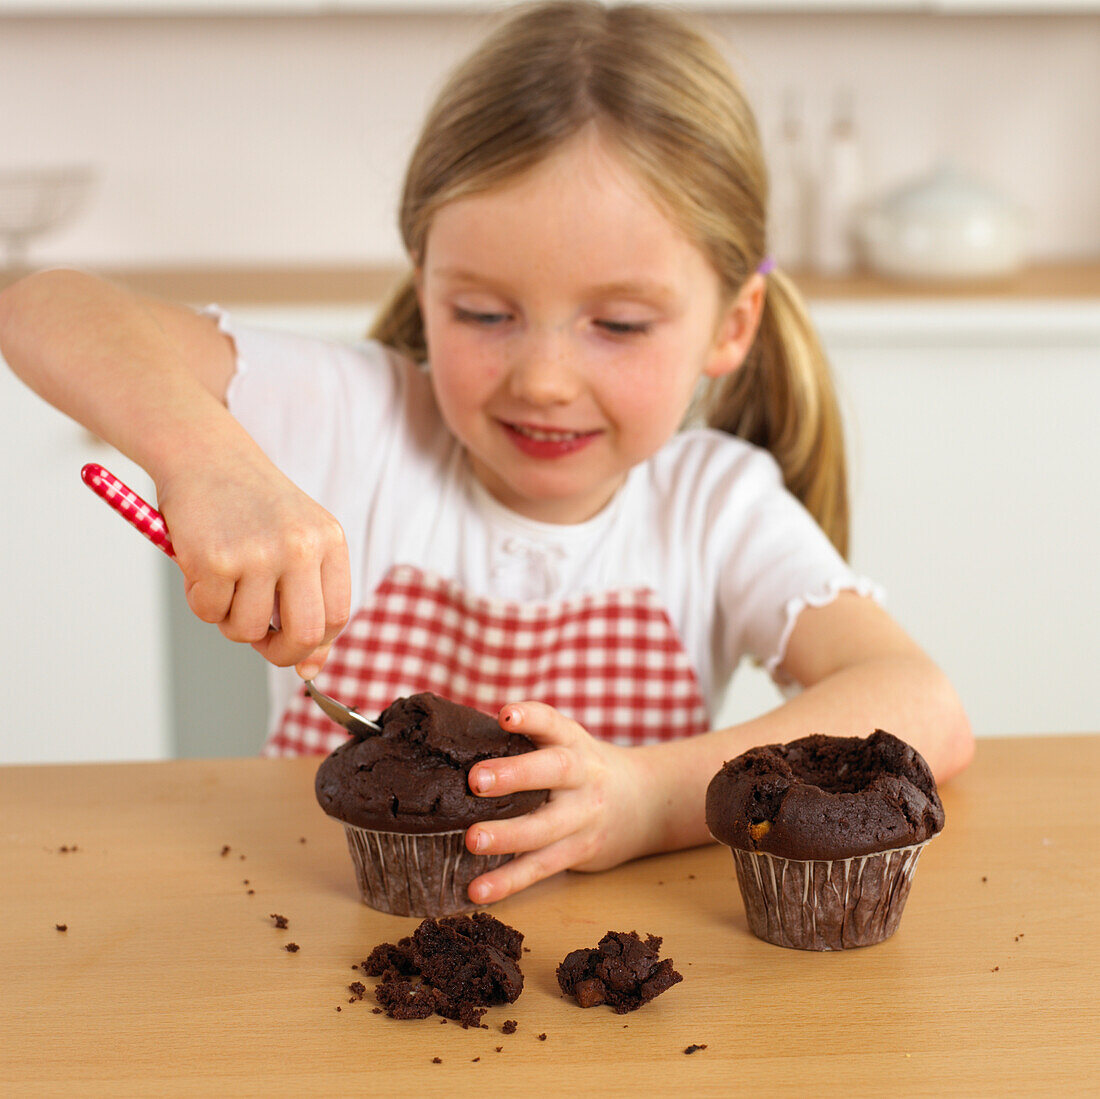 Girl pushing spoon into chocolate muffin